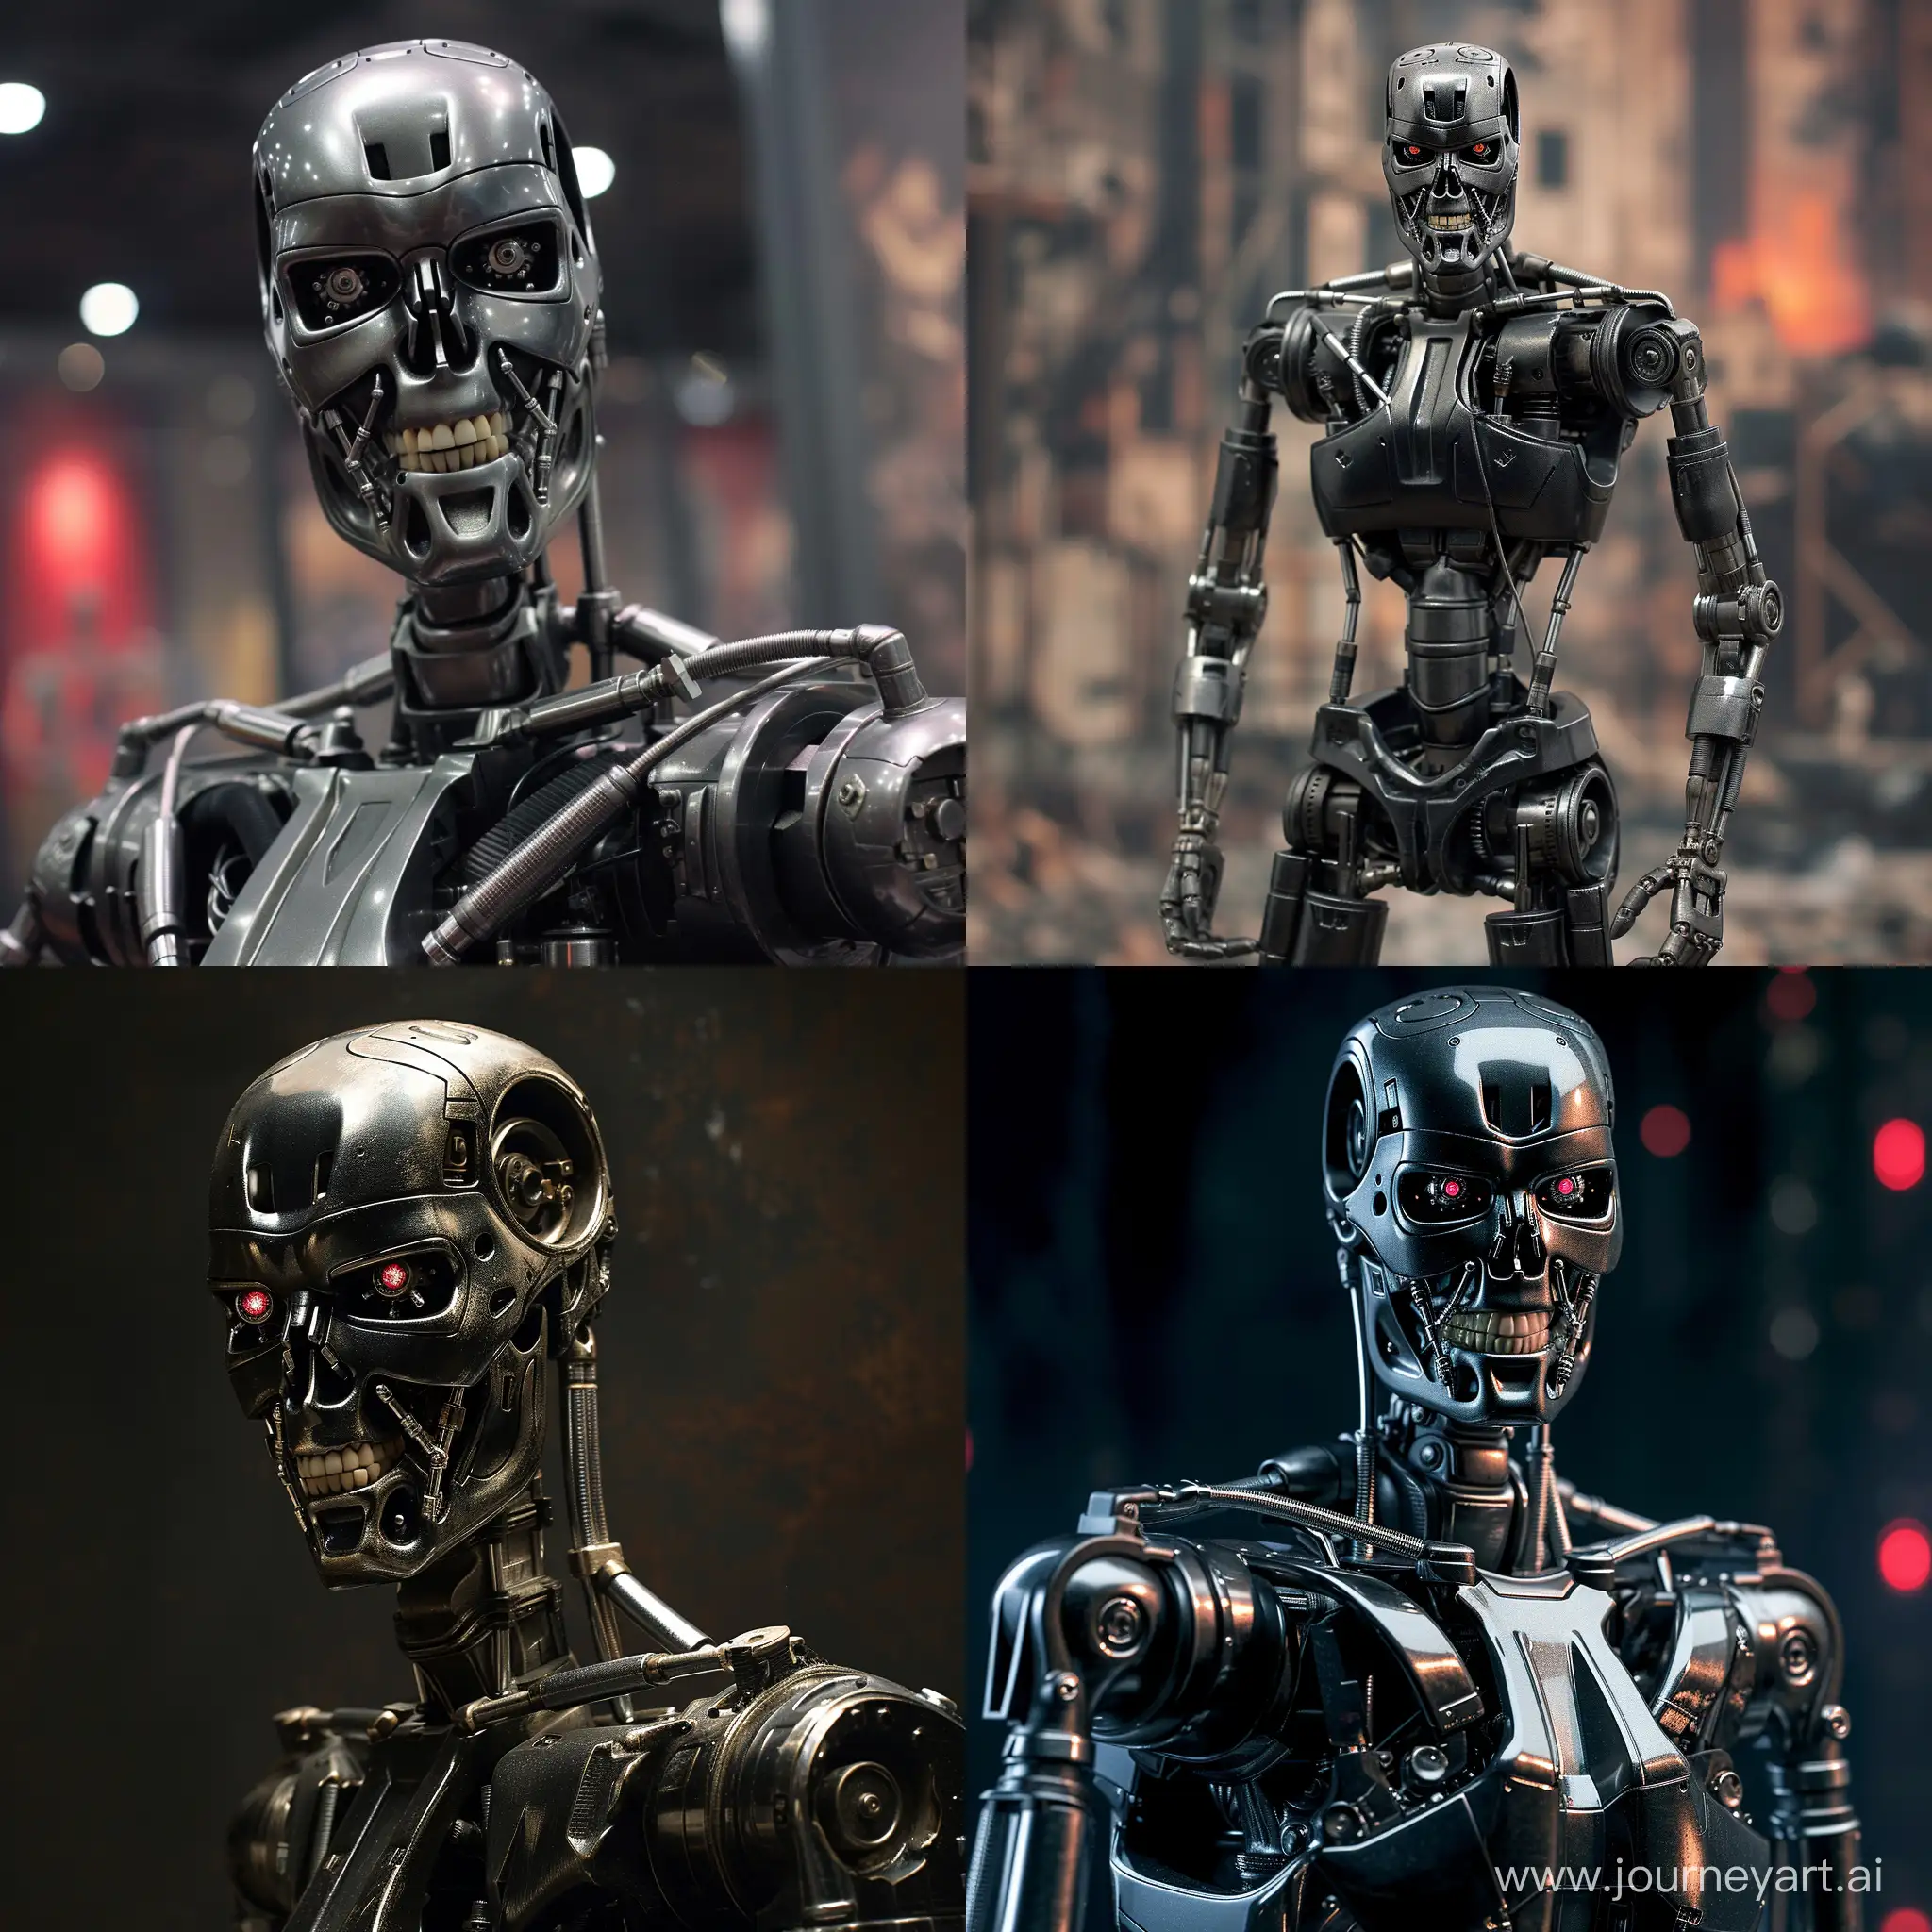 Apocalyptic-Terminator-T600-Dystopian-Cyborg-in-a-11-Ratio-Scene